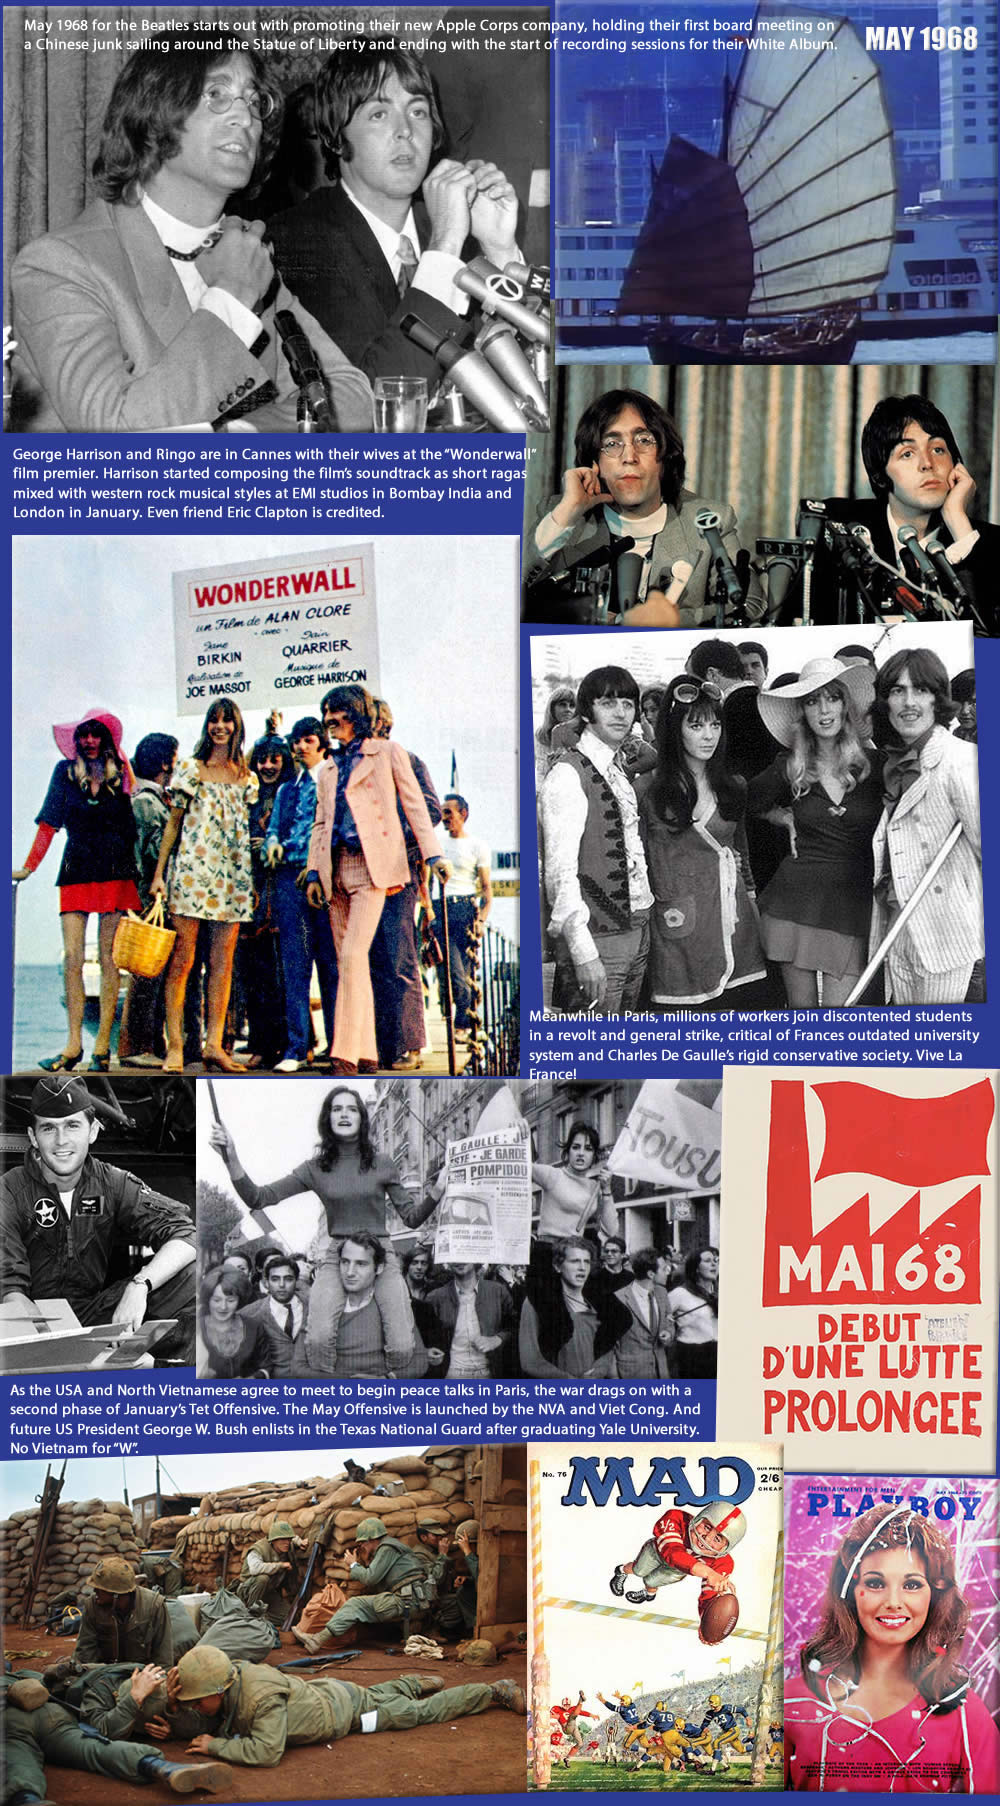 Beatles Retro News May 1968